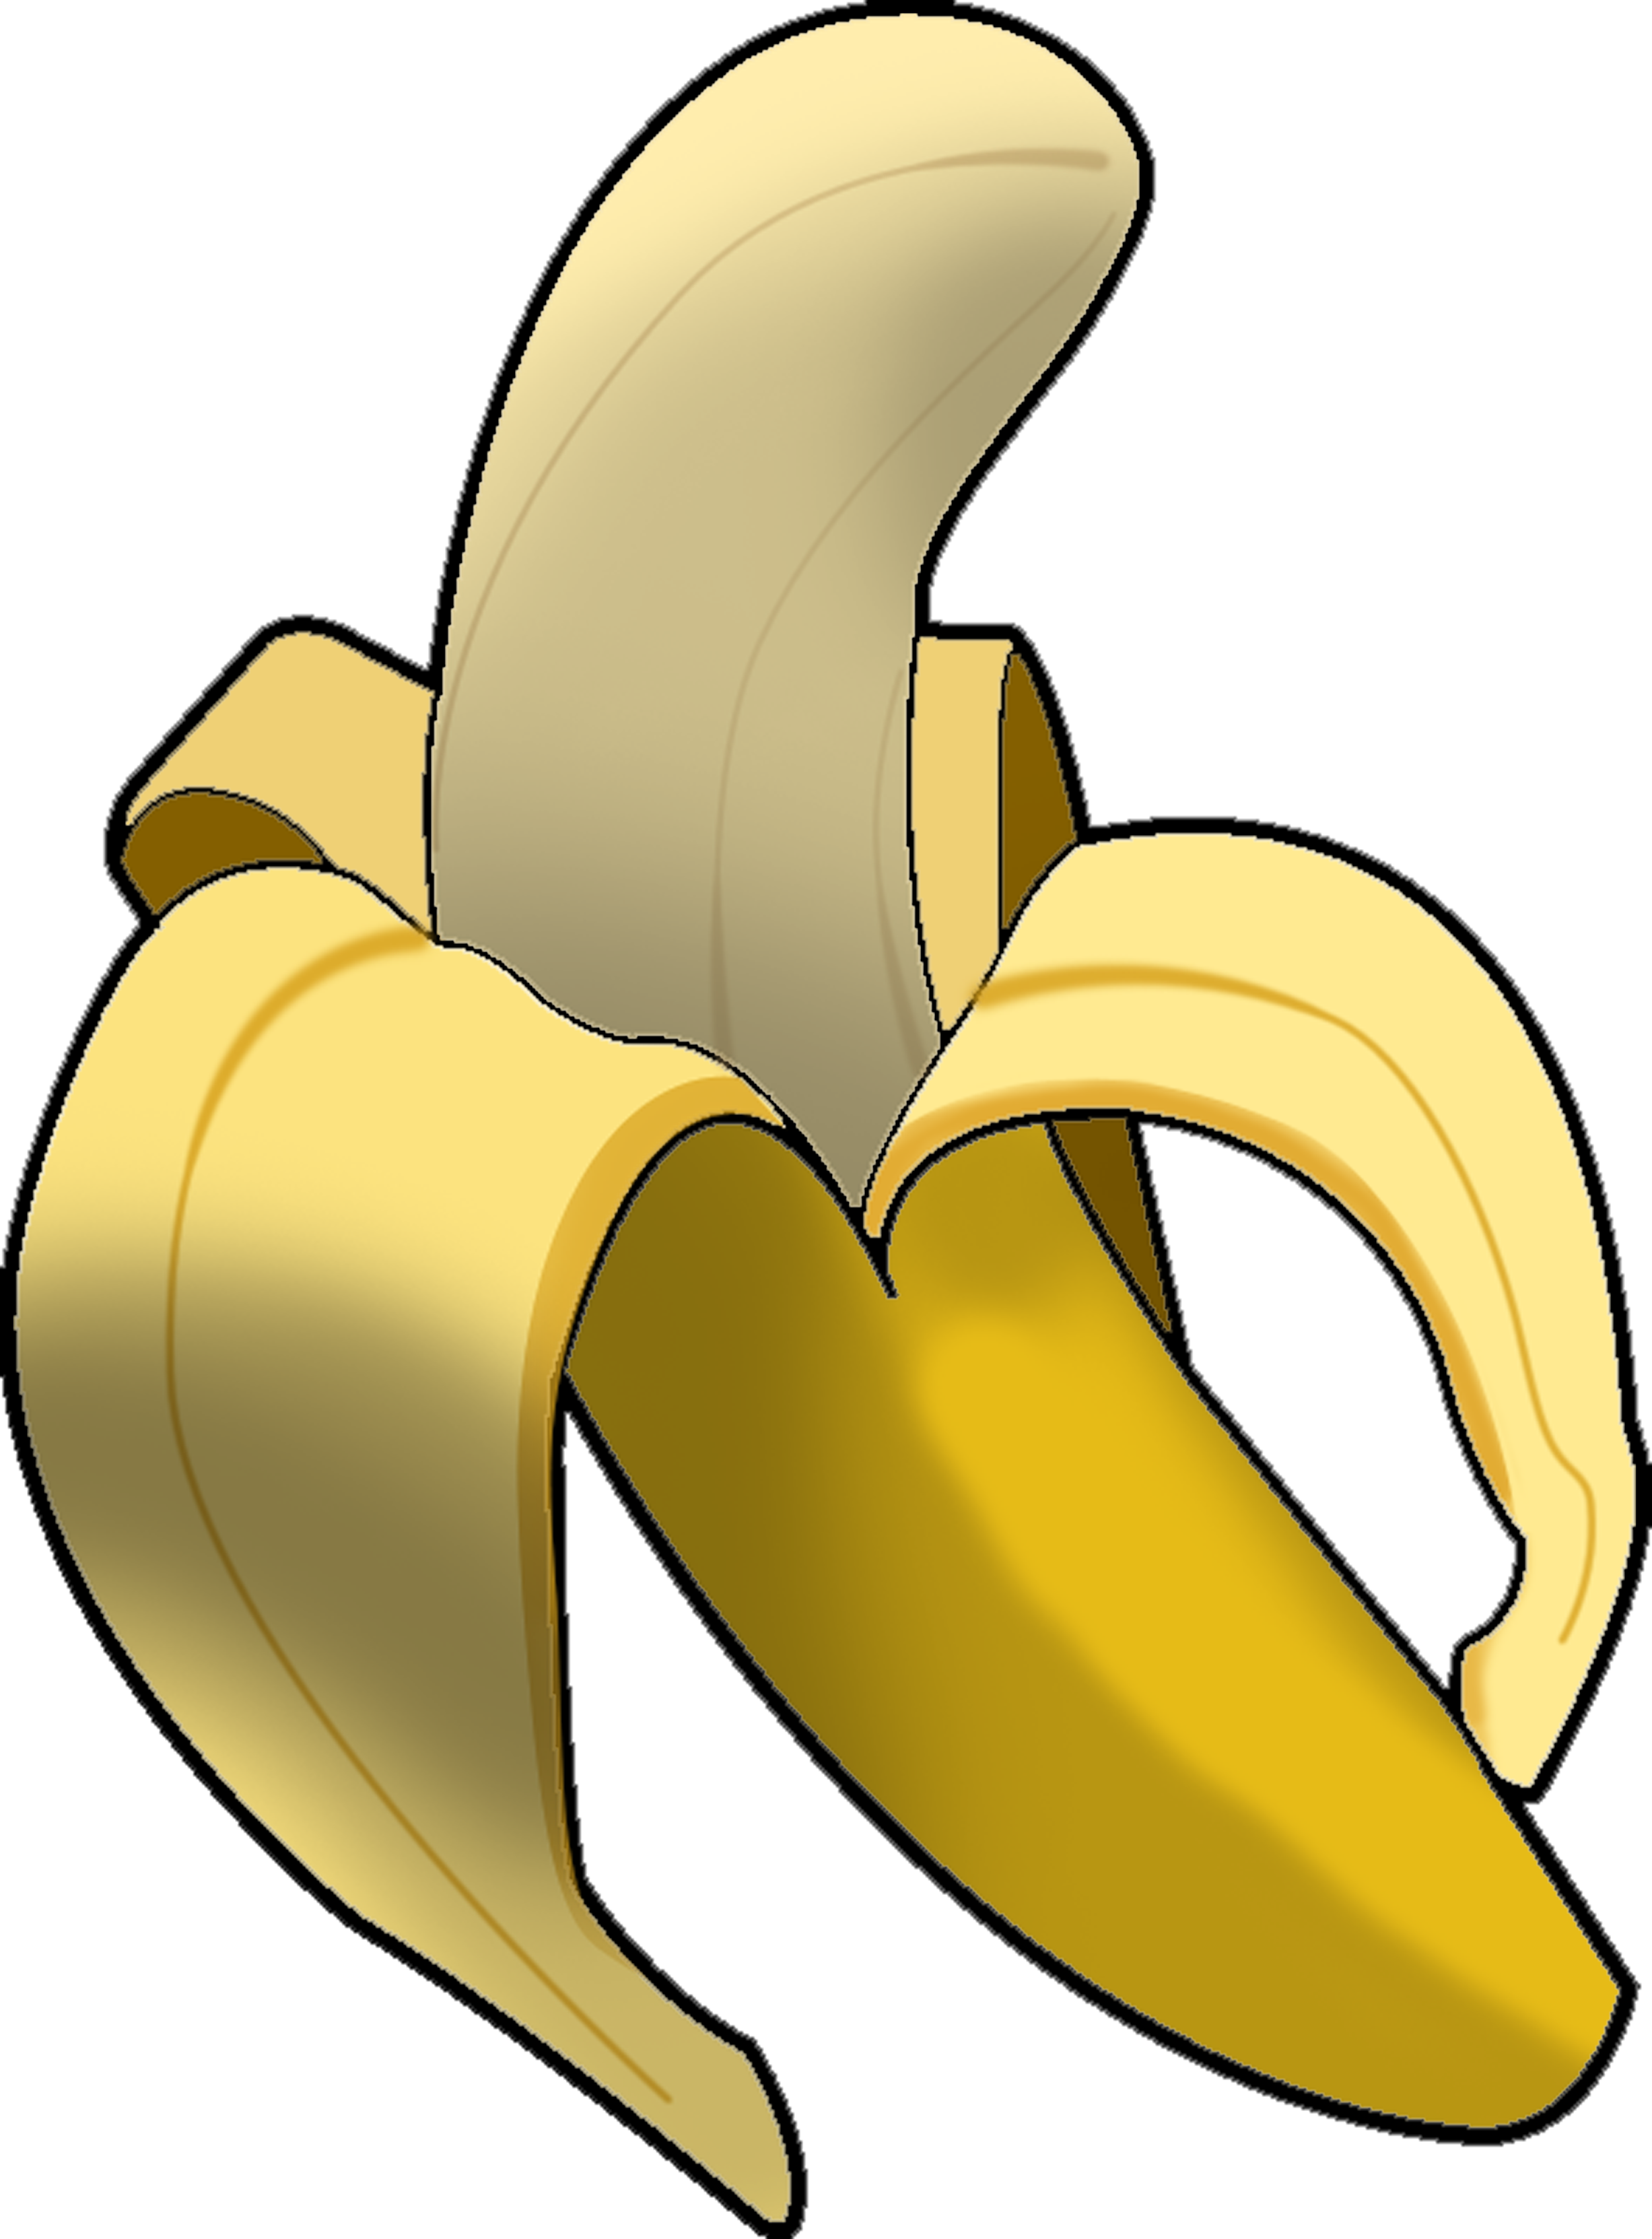 Plantain Banana   Free Images At Clker Com   Vector Clip Art Online